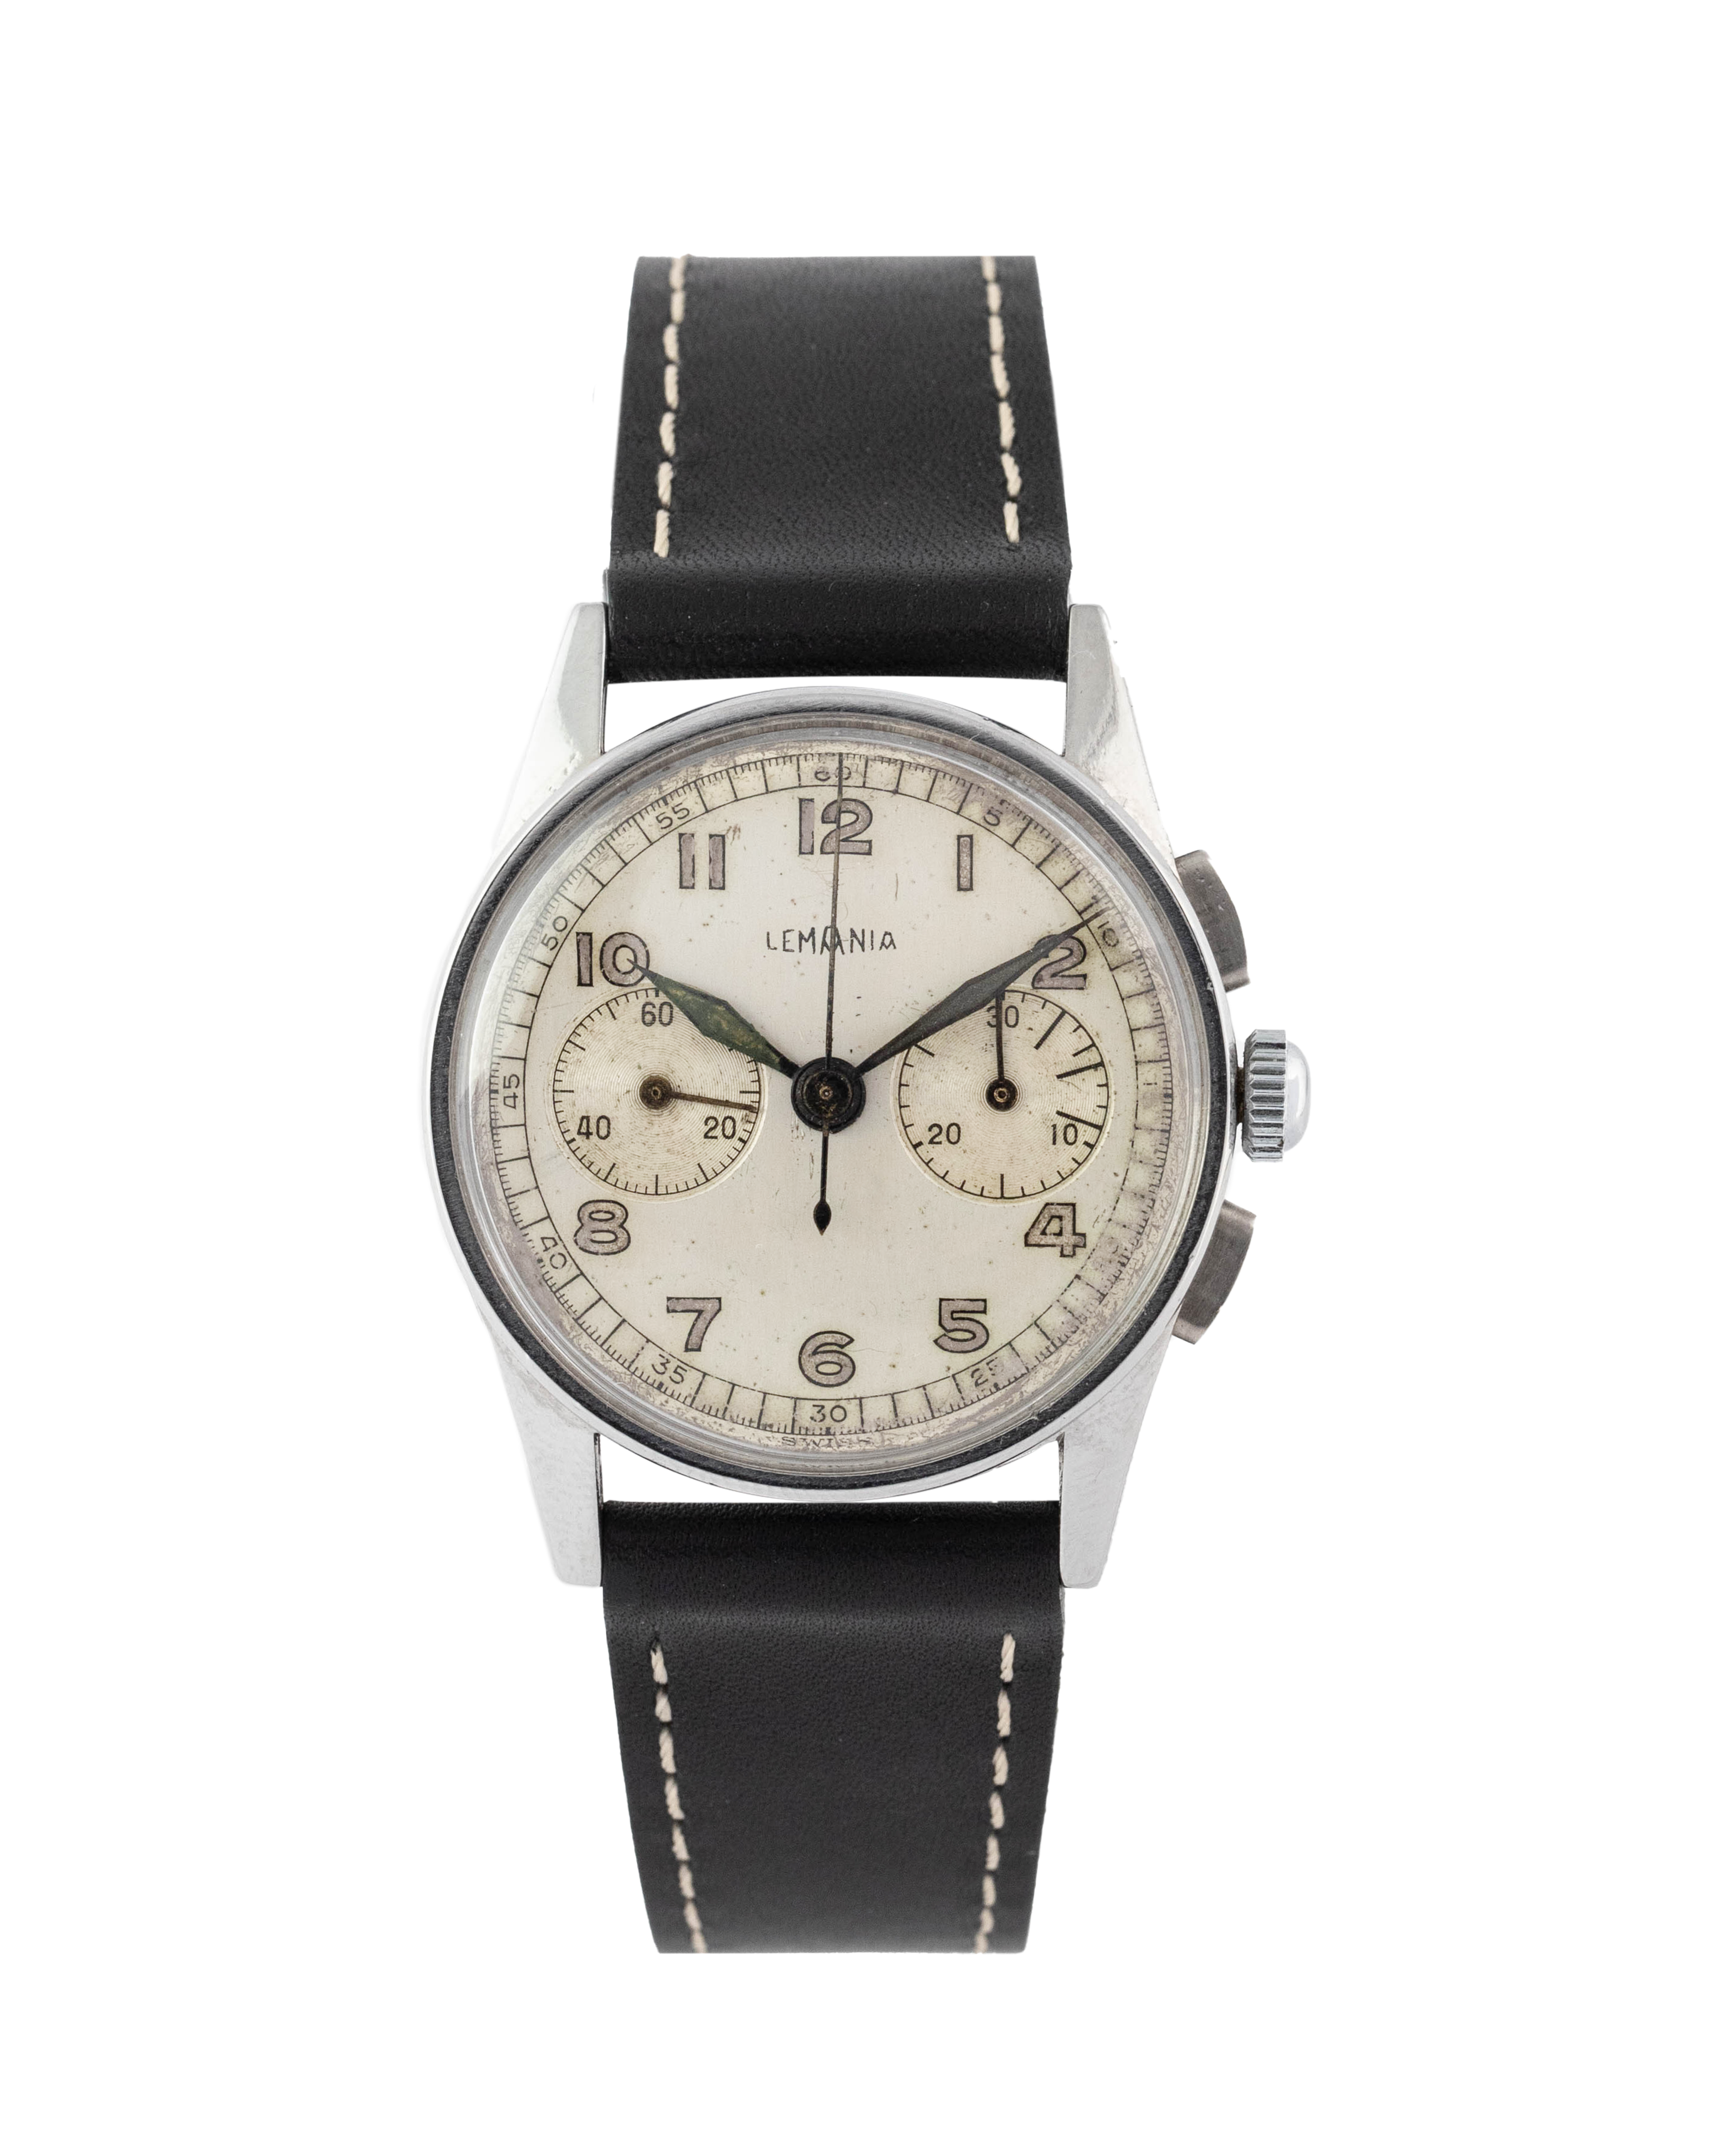 Lemania Chronograph "Radium Numbers" wrist watch 